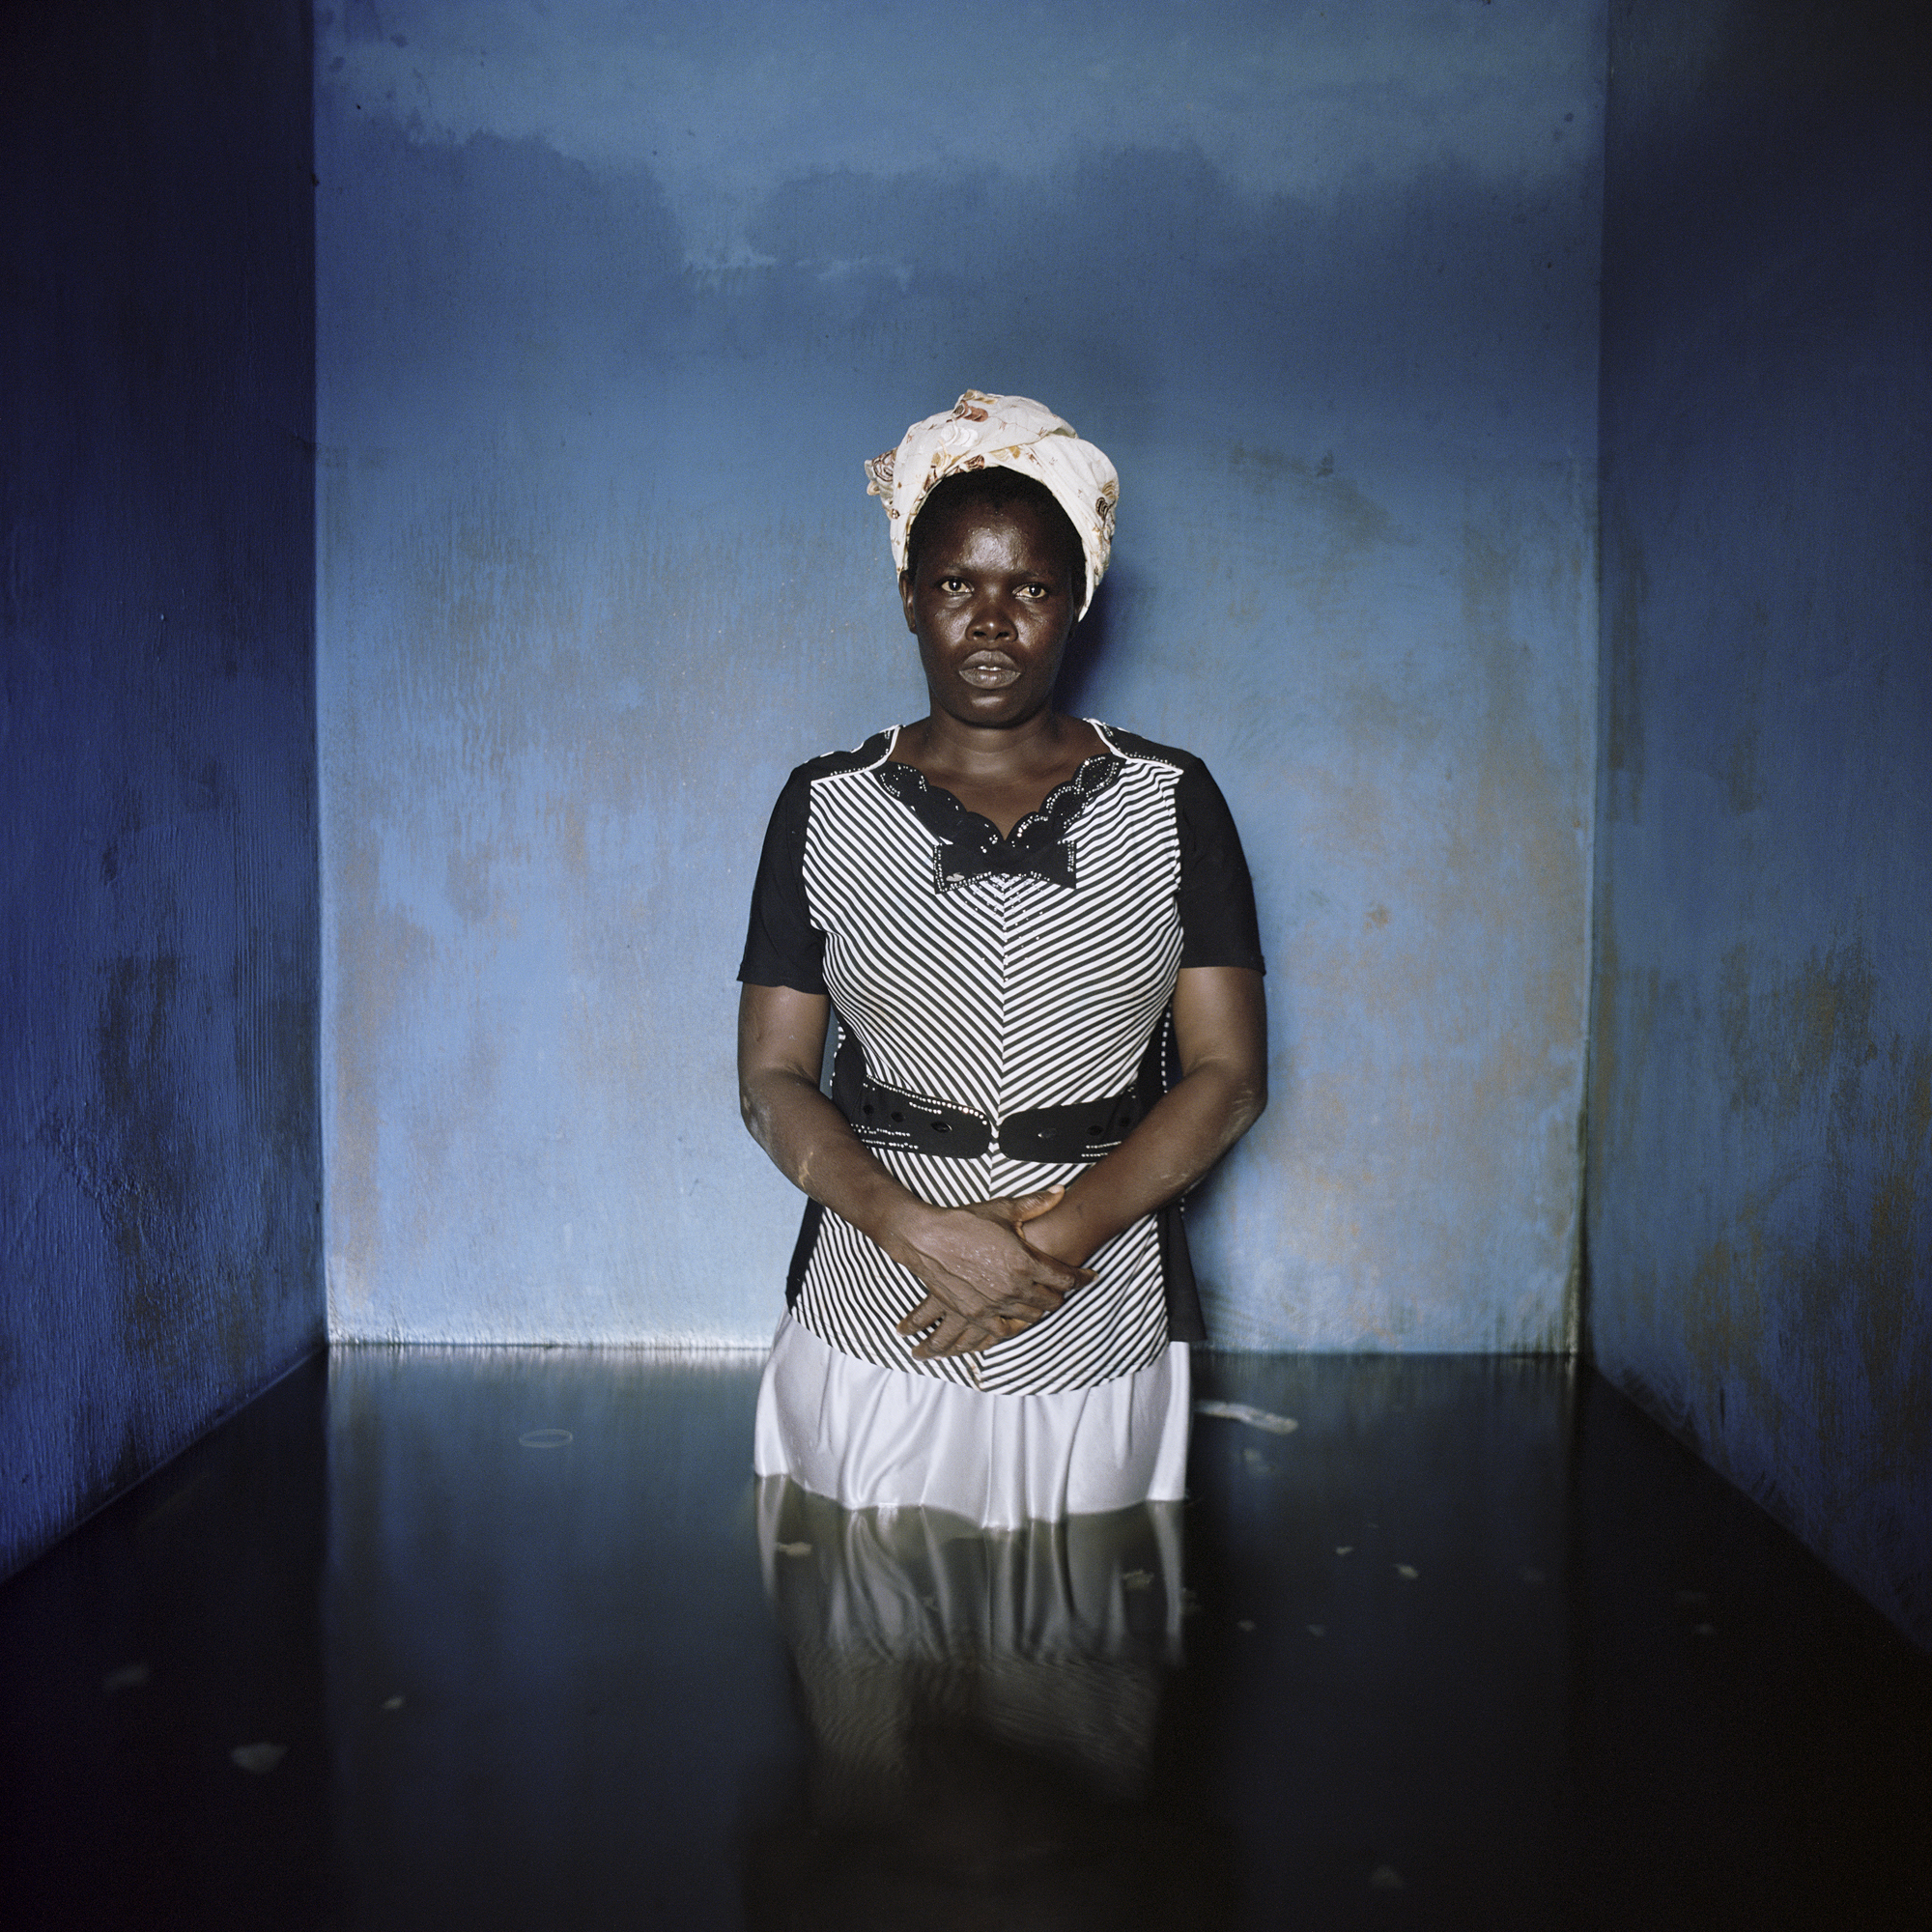 SUBMERGED PORTRAITS. Florence Abraham Igbogene Bayelsa Stte Nigeria November 2012. ©Gideon Mendel